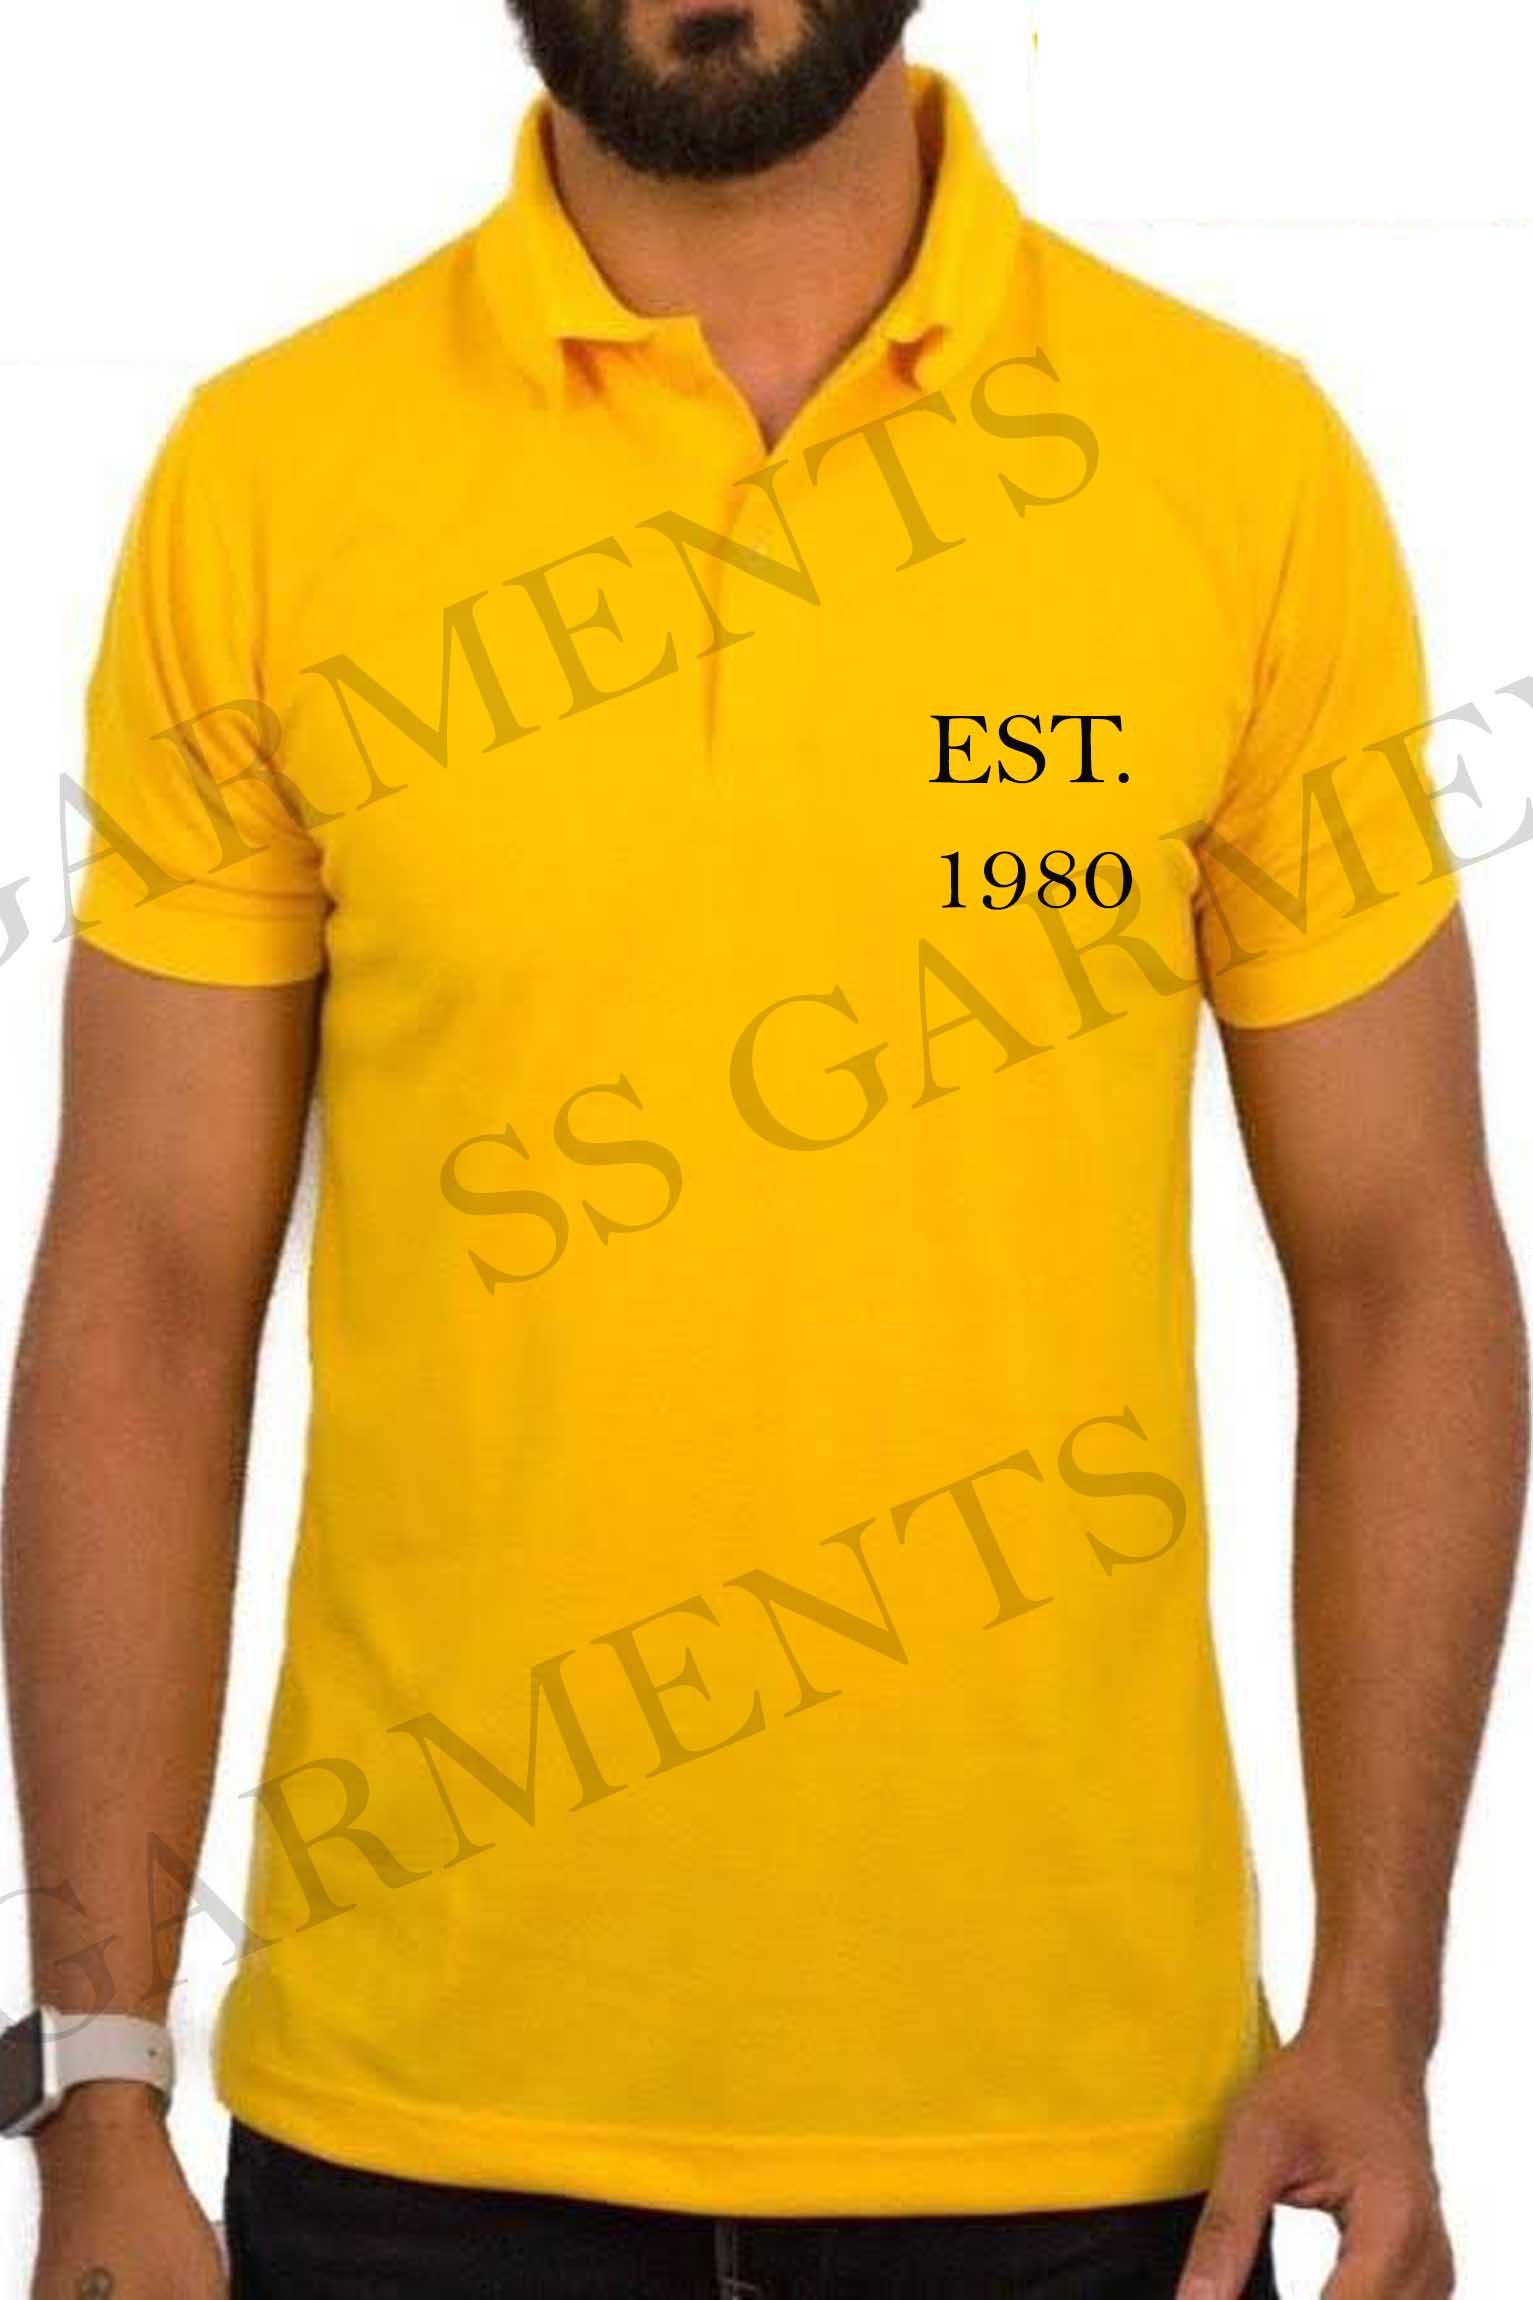 Polo Est. 1980 Printed T-Shirt